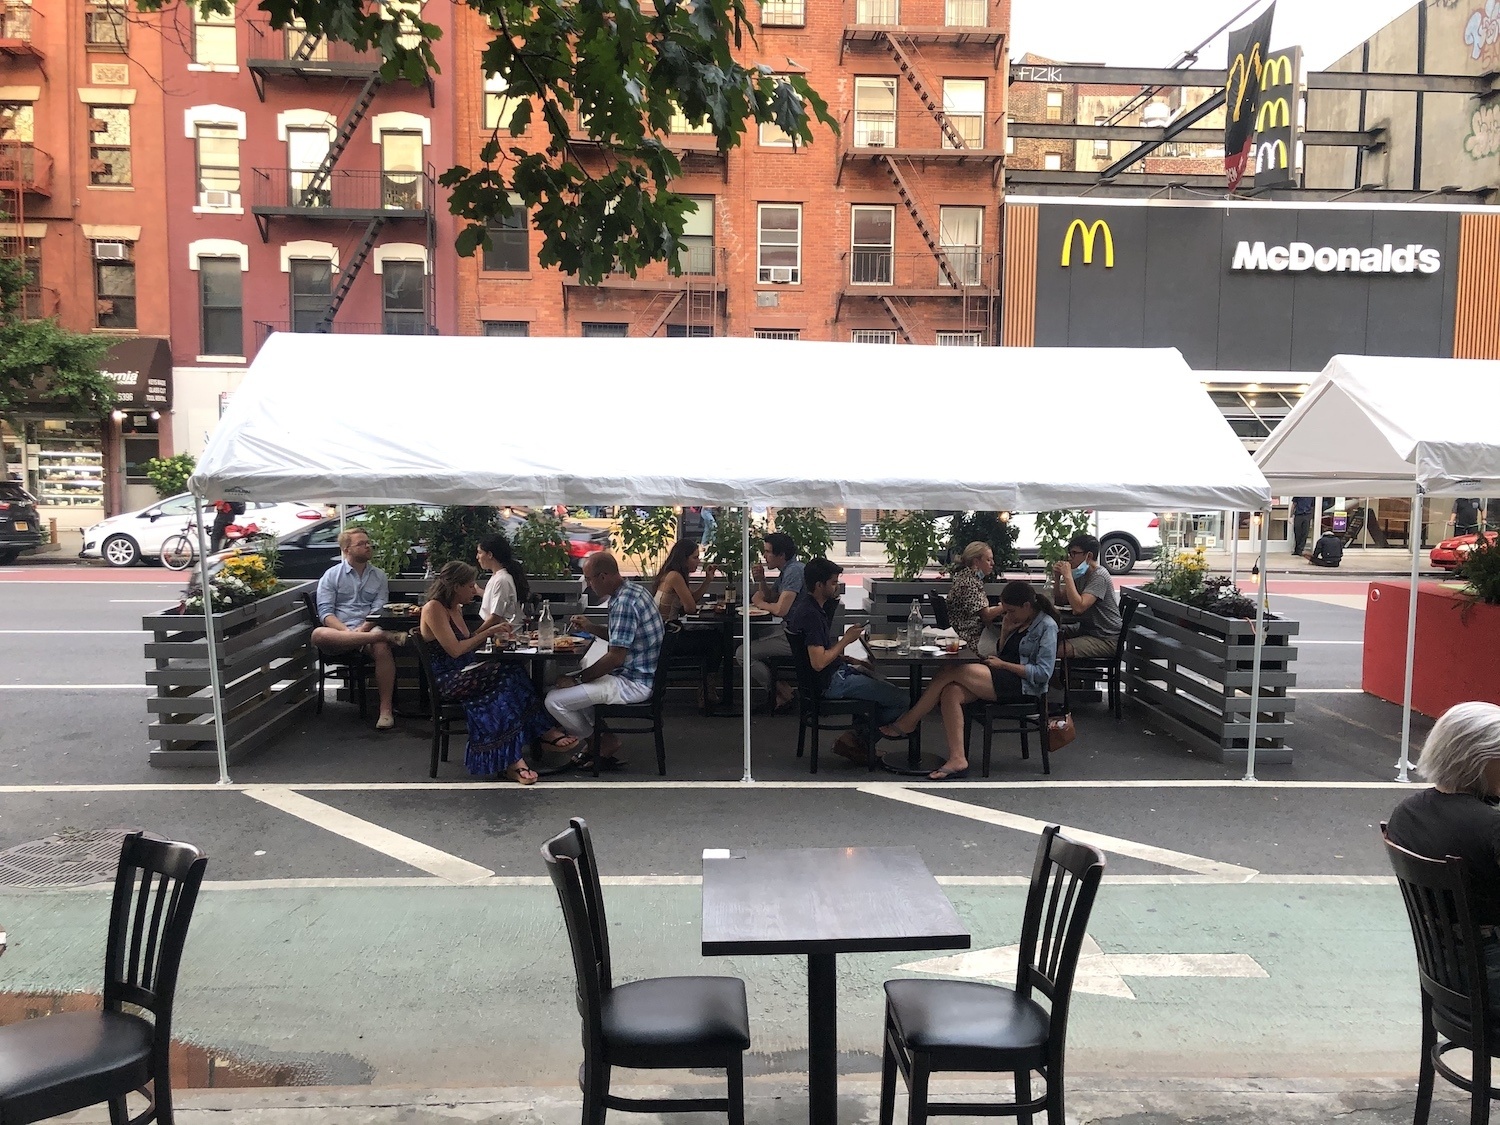 Tent seating at Huertas in New York City. September 2020